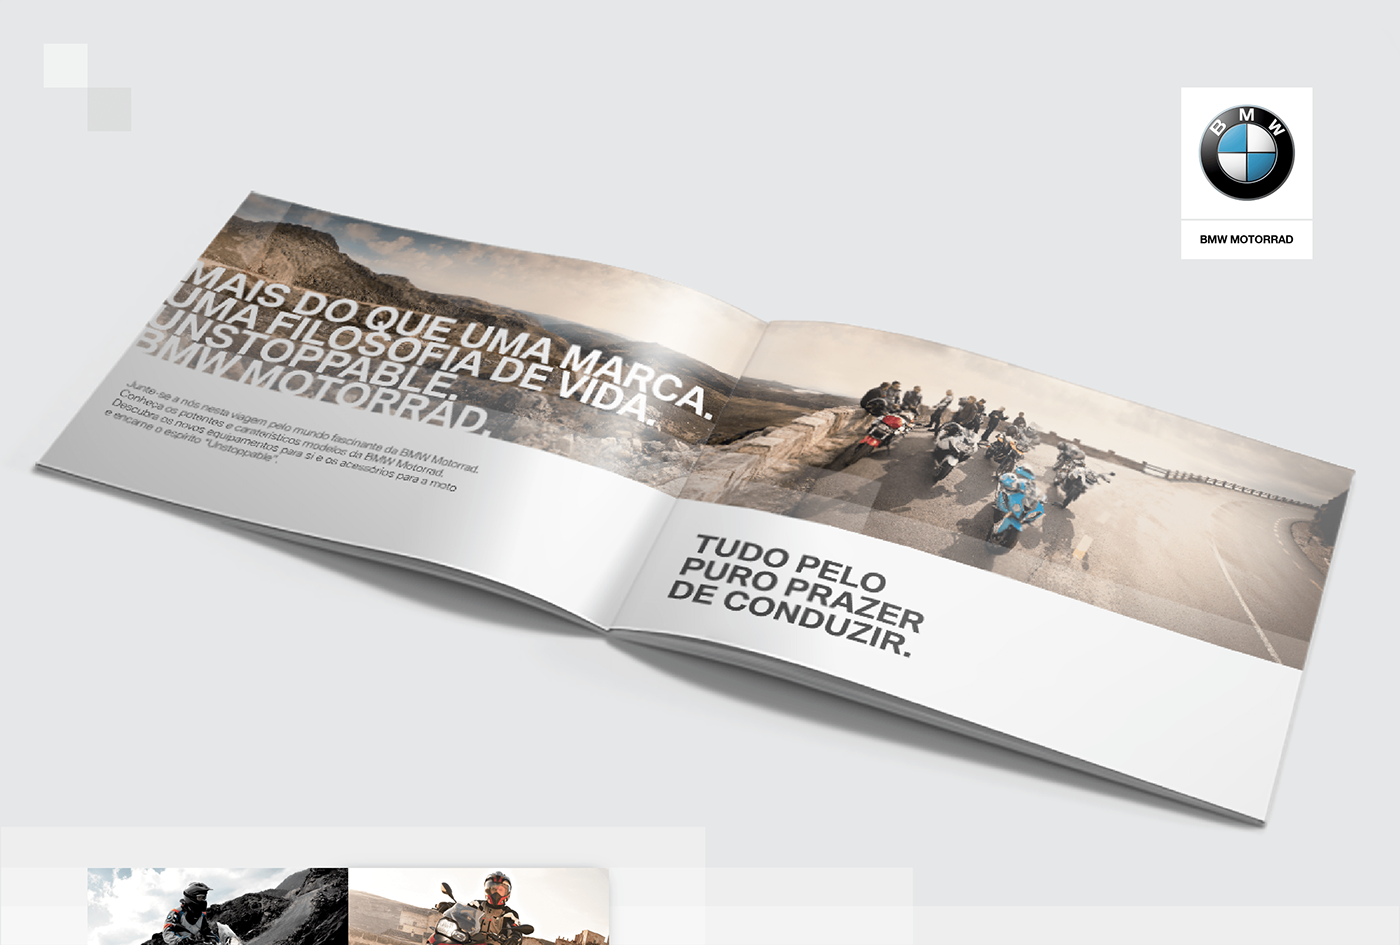 BMW motorrad motorcicle brochure direct marketing mkt Portugal Direct mail graphic design 